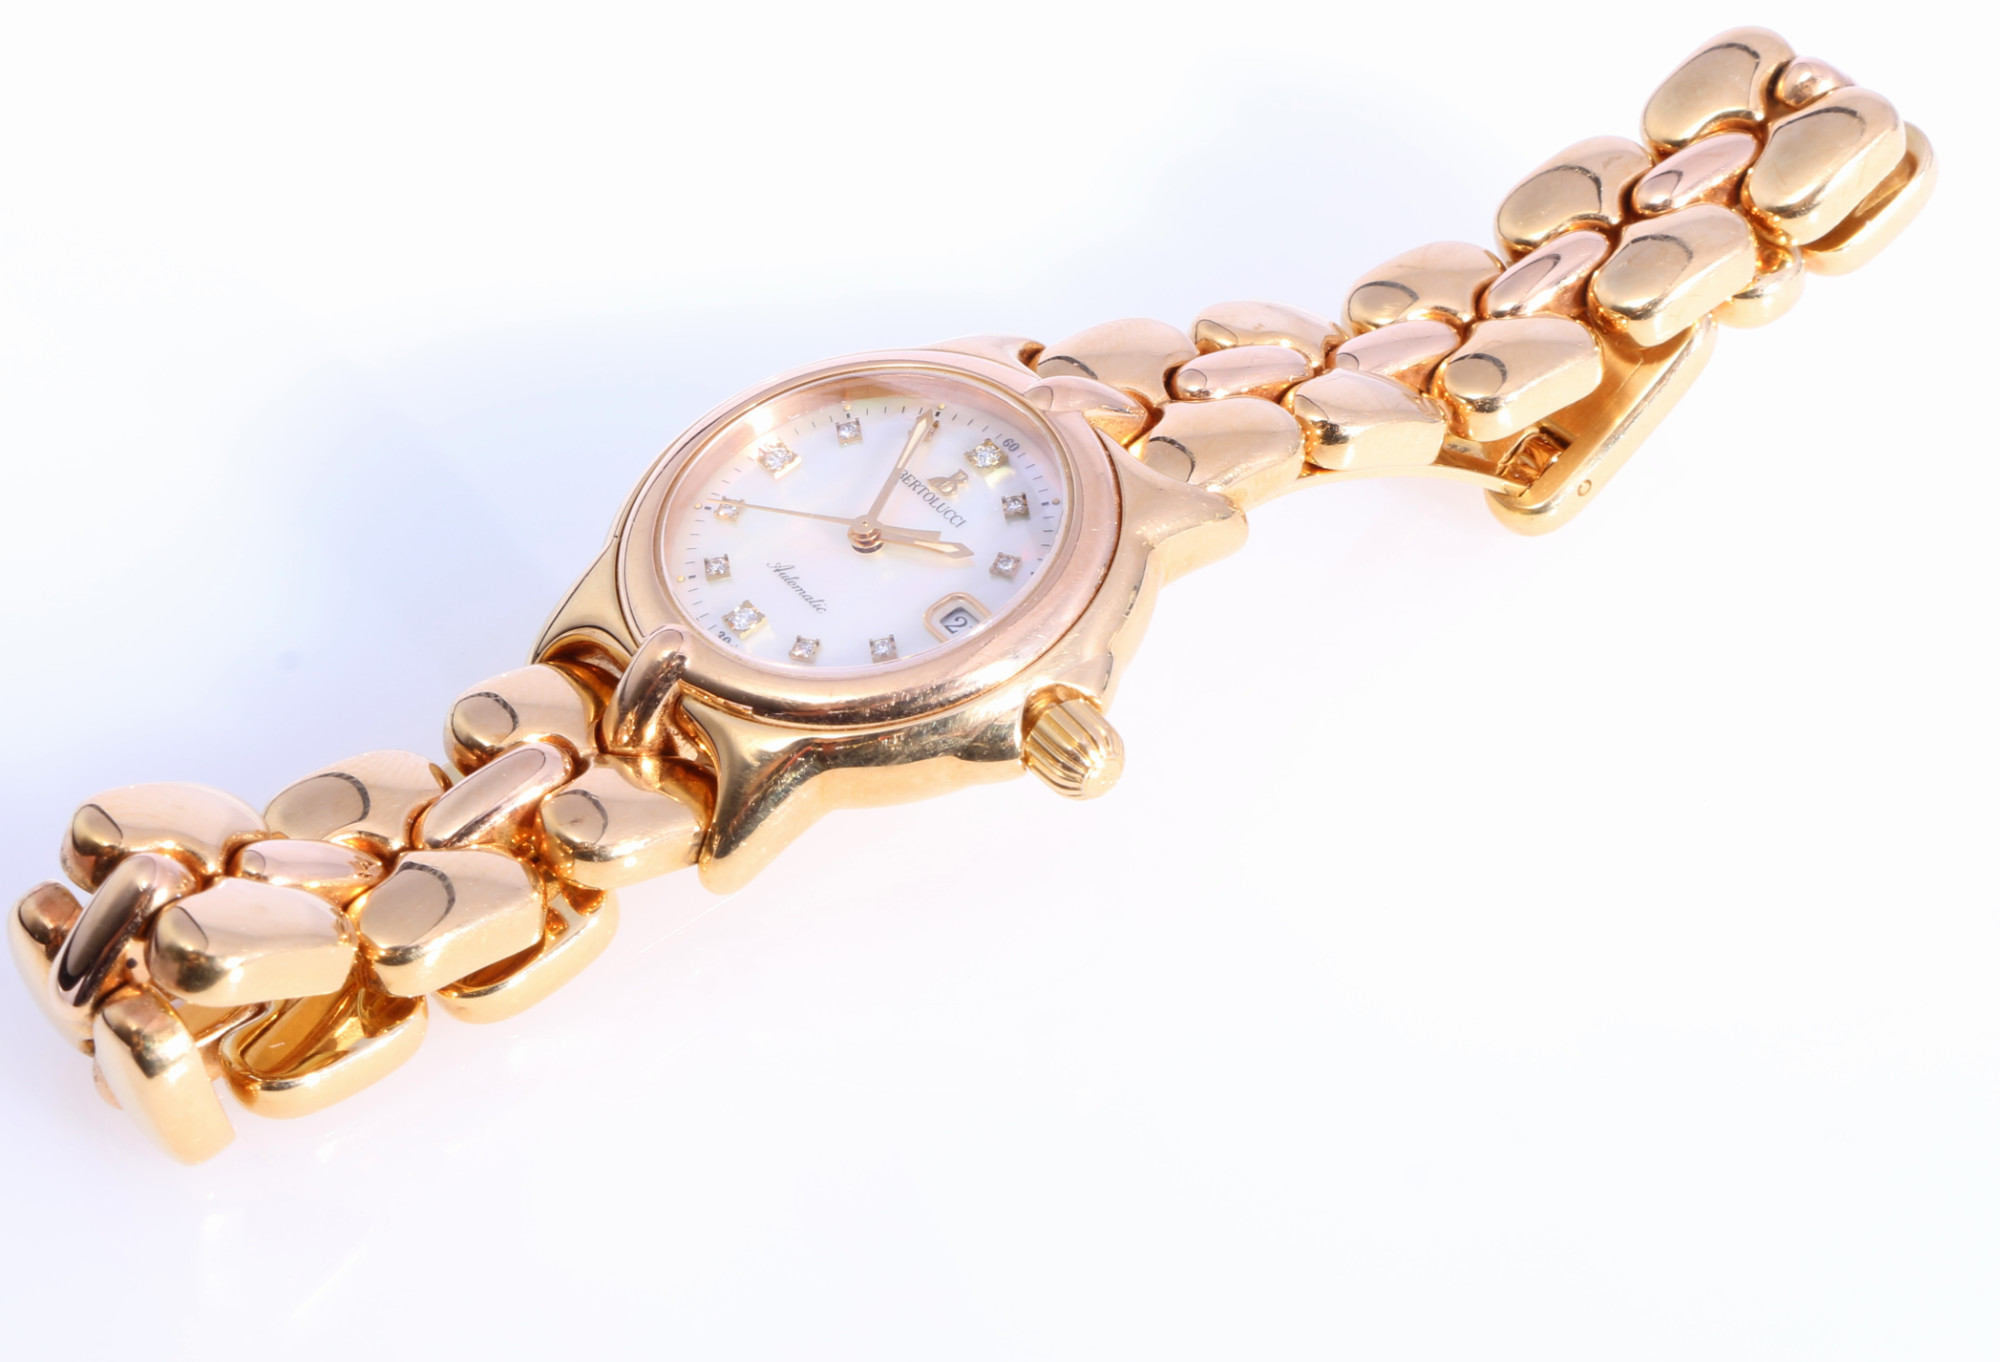 Bertolucci Pulchra 750 women's wrist watch with diamonds, 18K Gold Damen Armbanduhr mit Diamanten, - Image 4 of 9